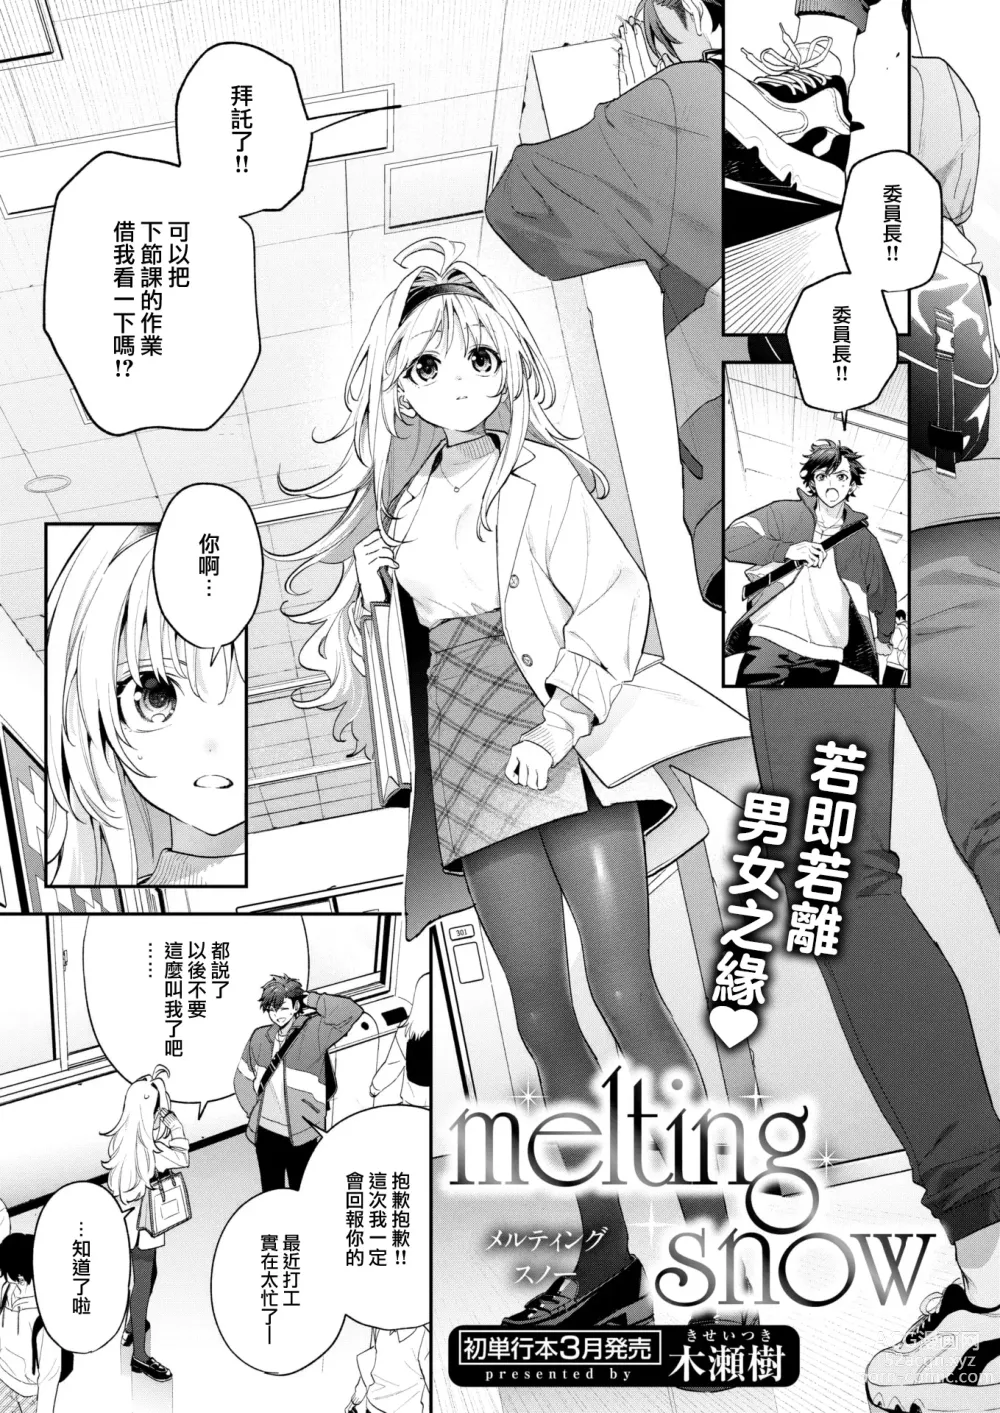 Page 2 of manga melting snow